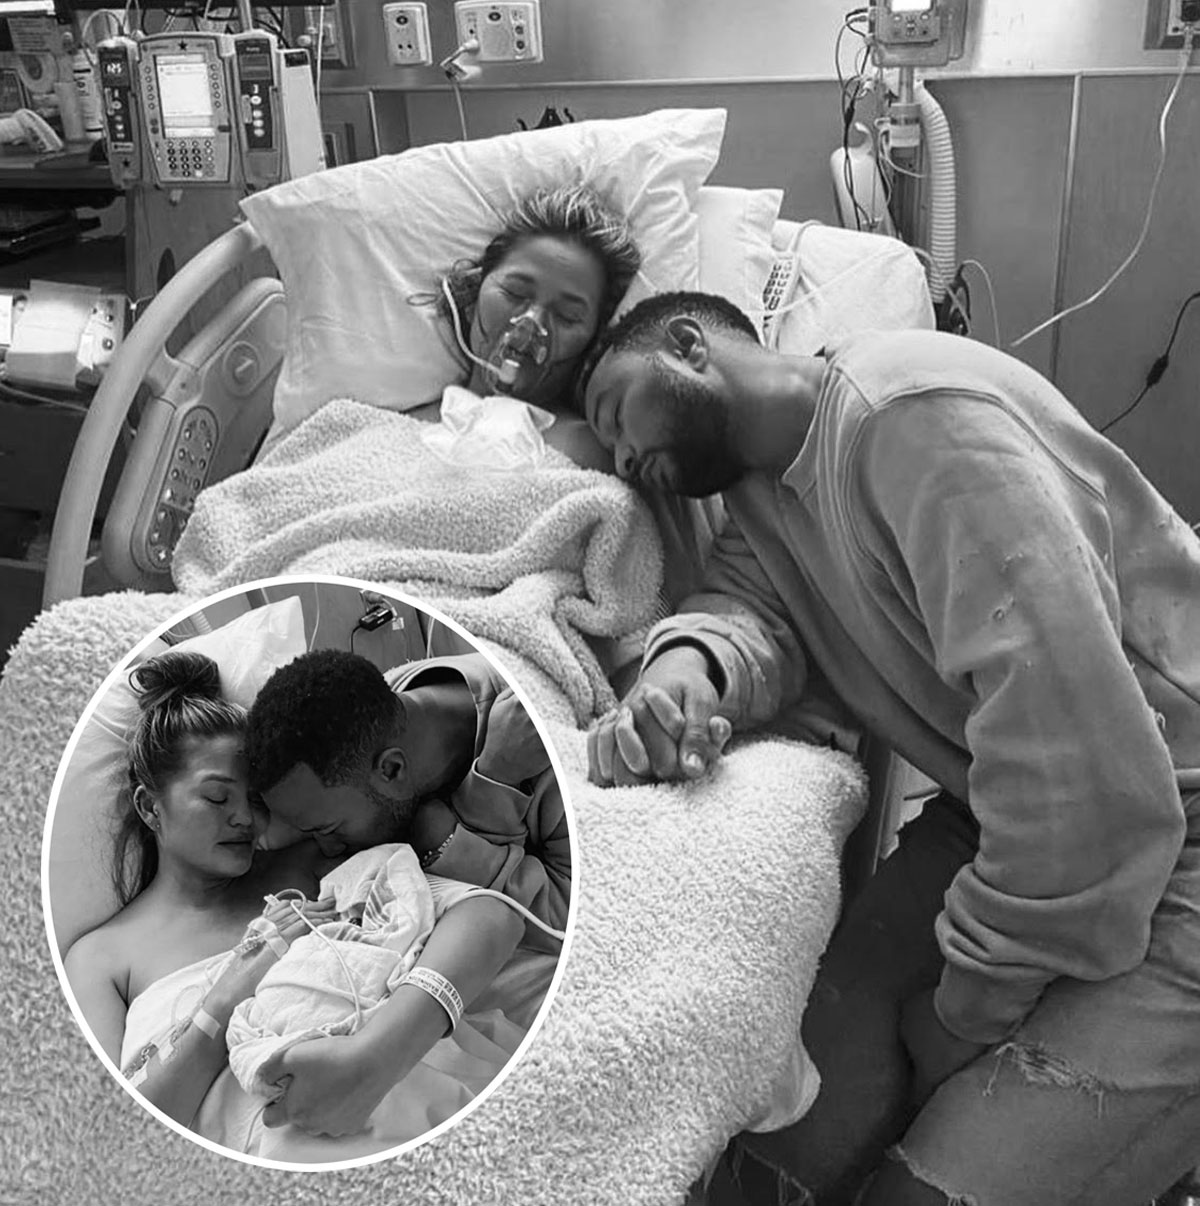 Chrissy Teigen and John Legend suffer pregnancy loss